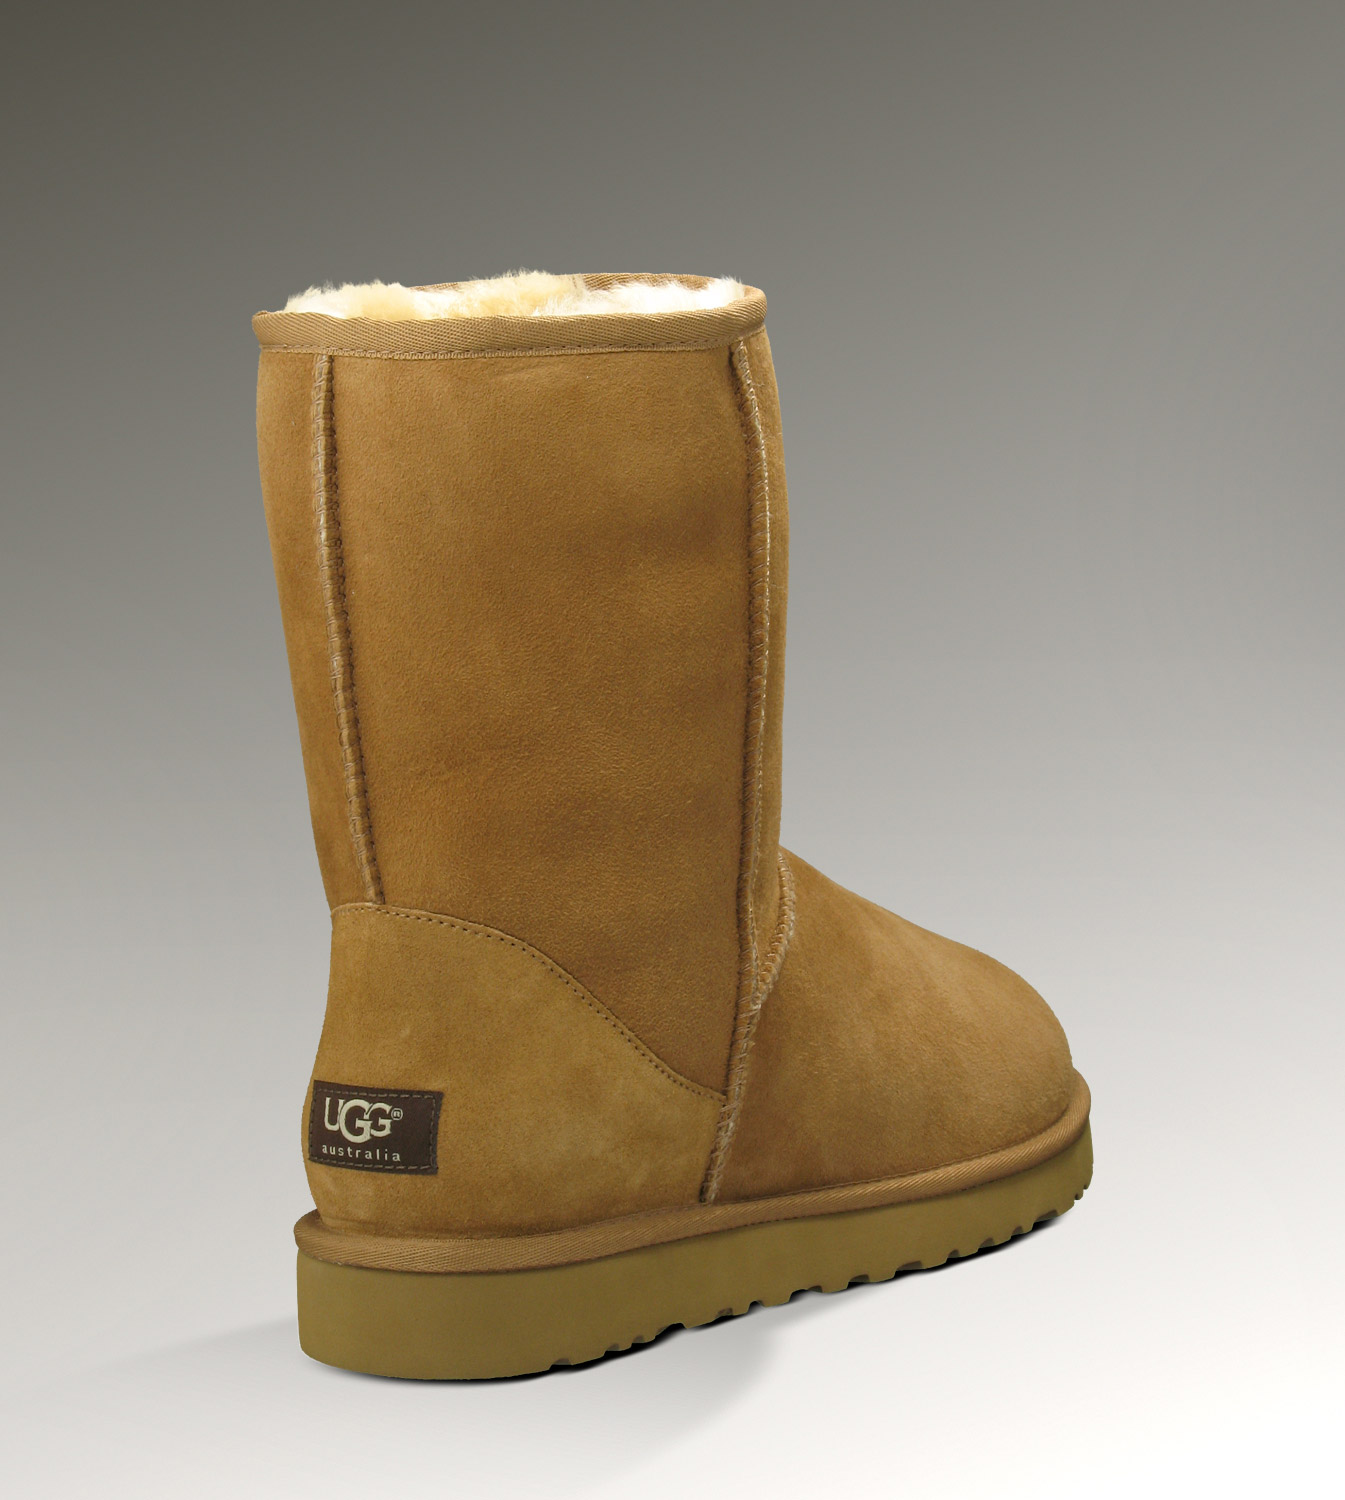 Ugg Outlet Classic Short Chestnut Boots 961074